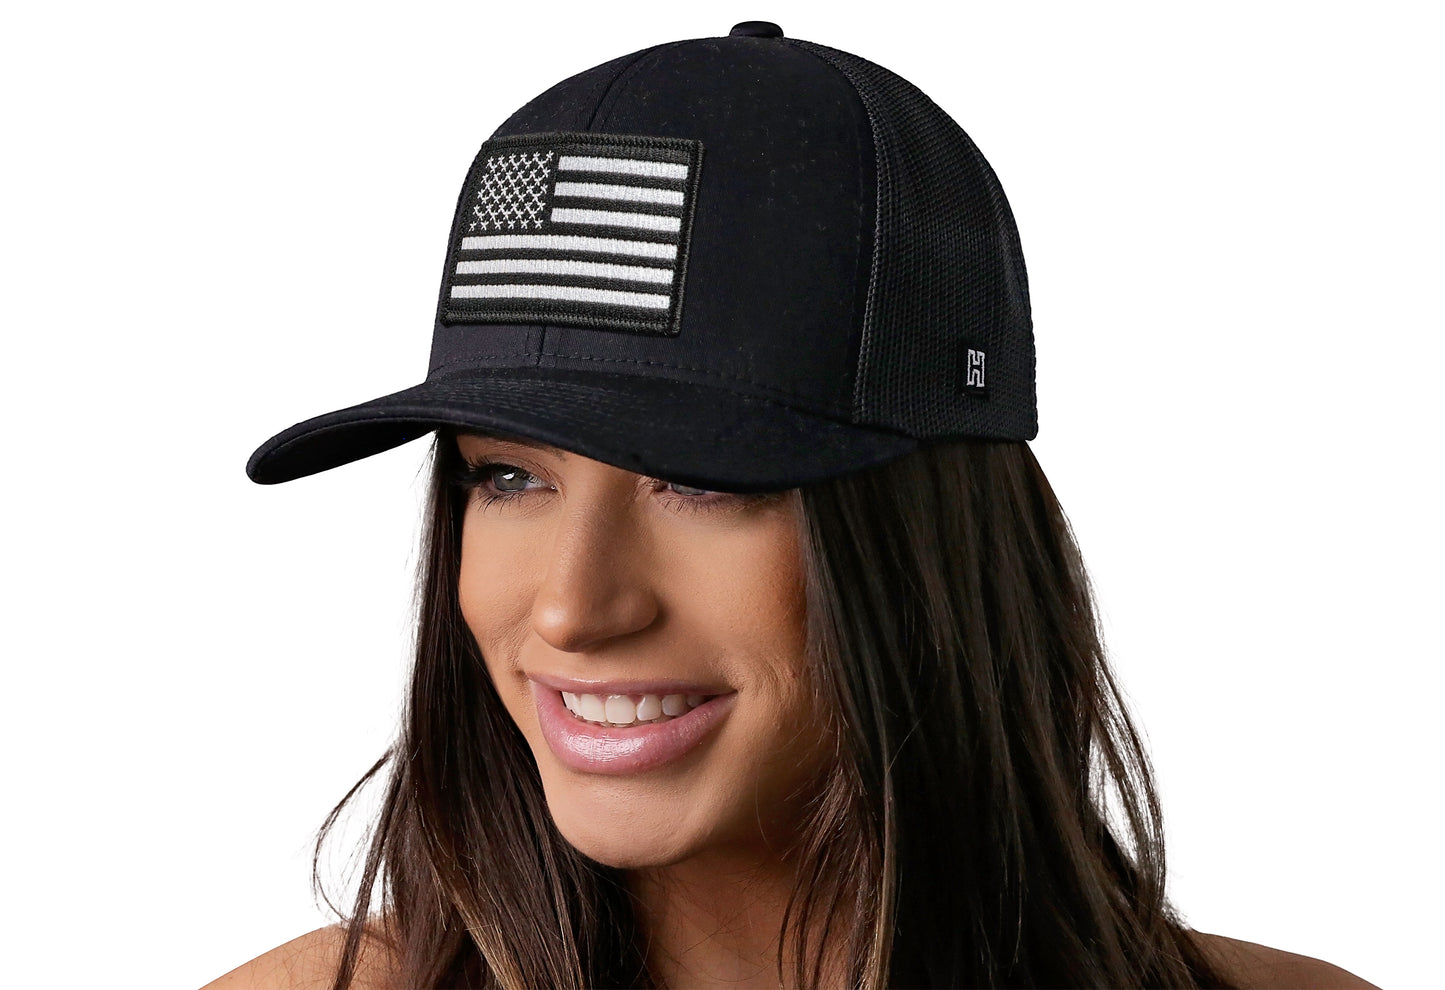 American Flag Trucker Hat  |  Black USA Snapback